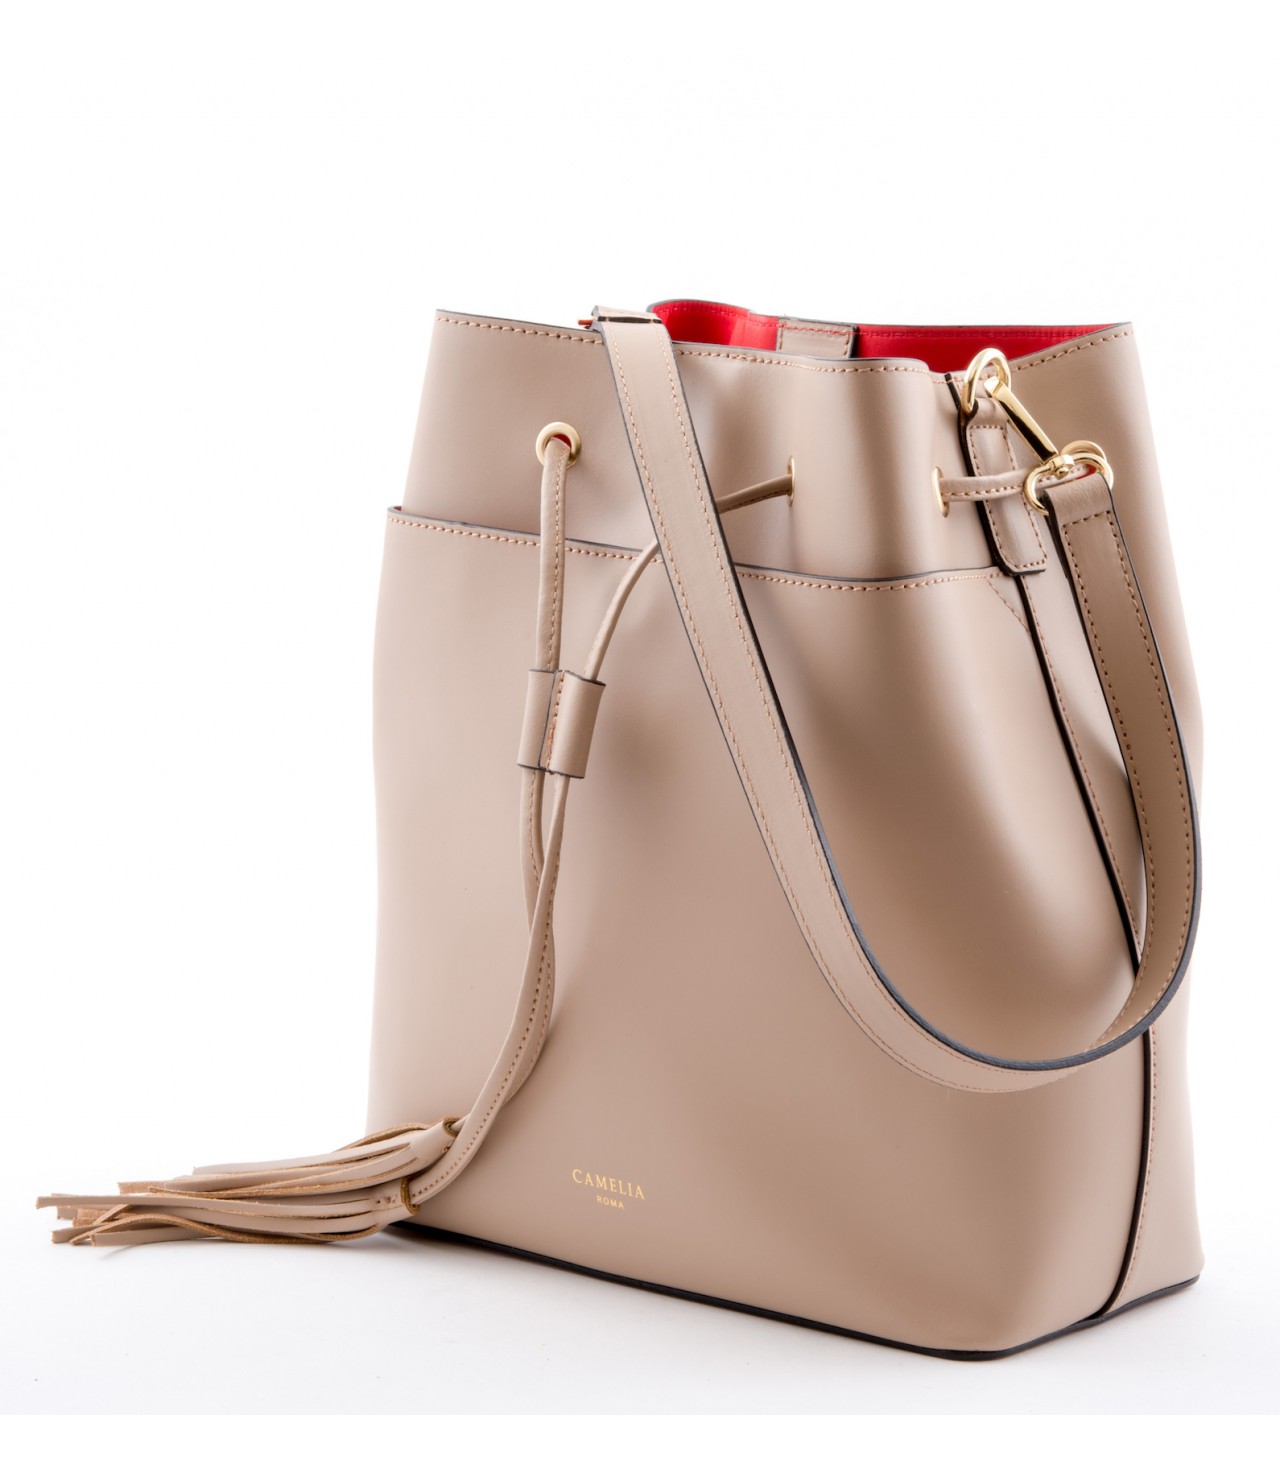 Saffiano Leather Crossbody bag - Camelia Roma